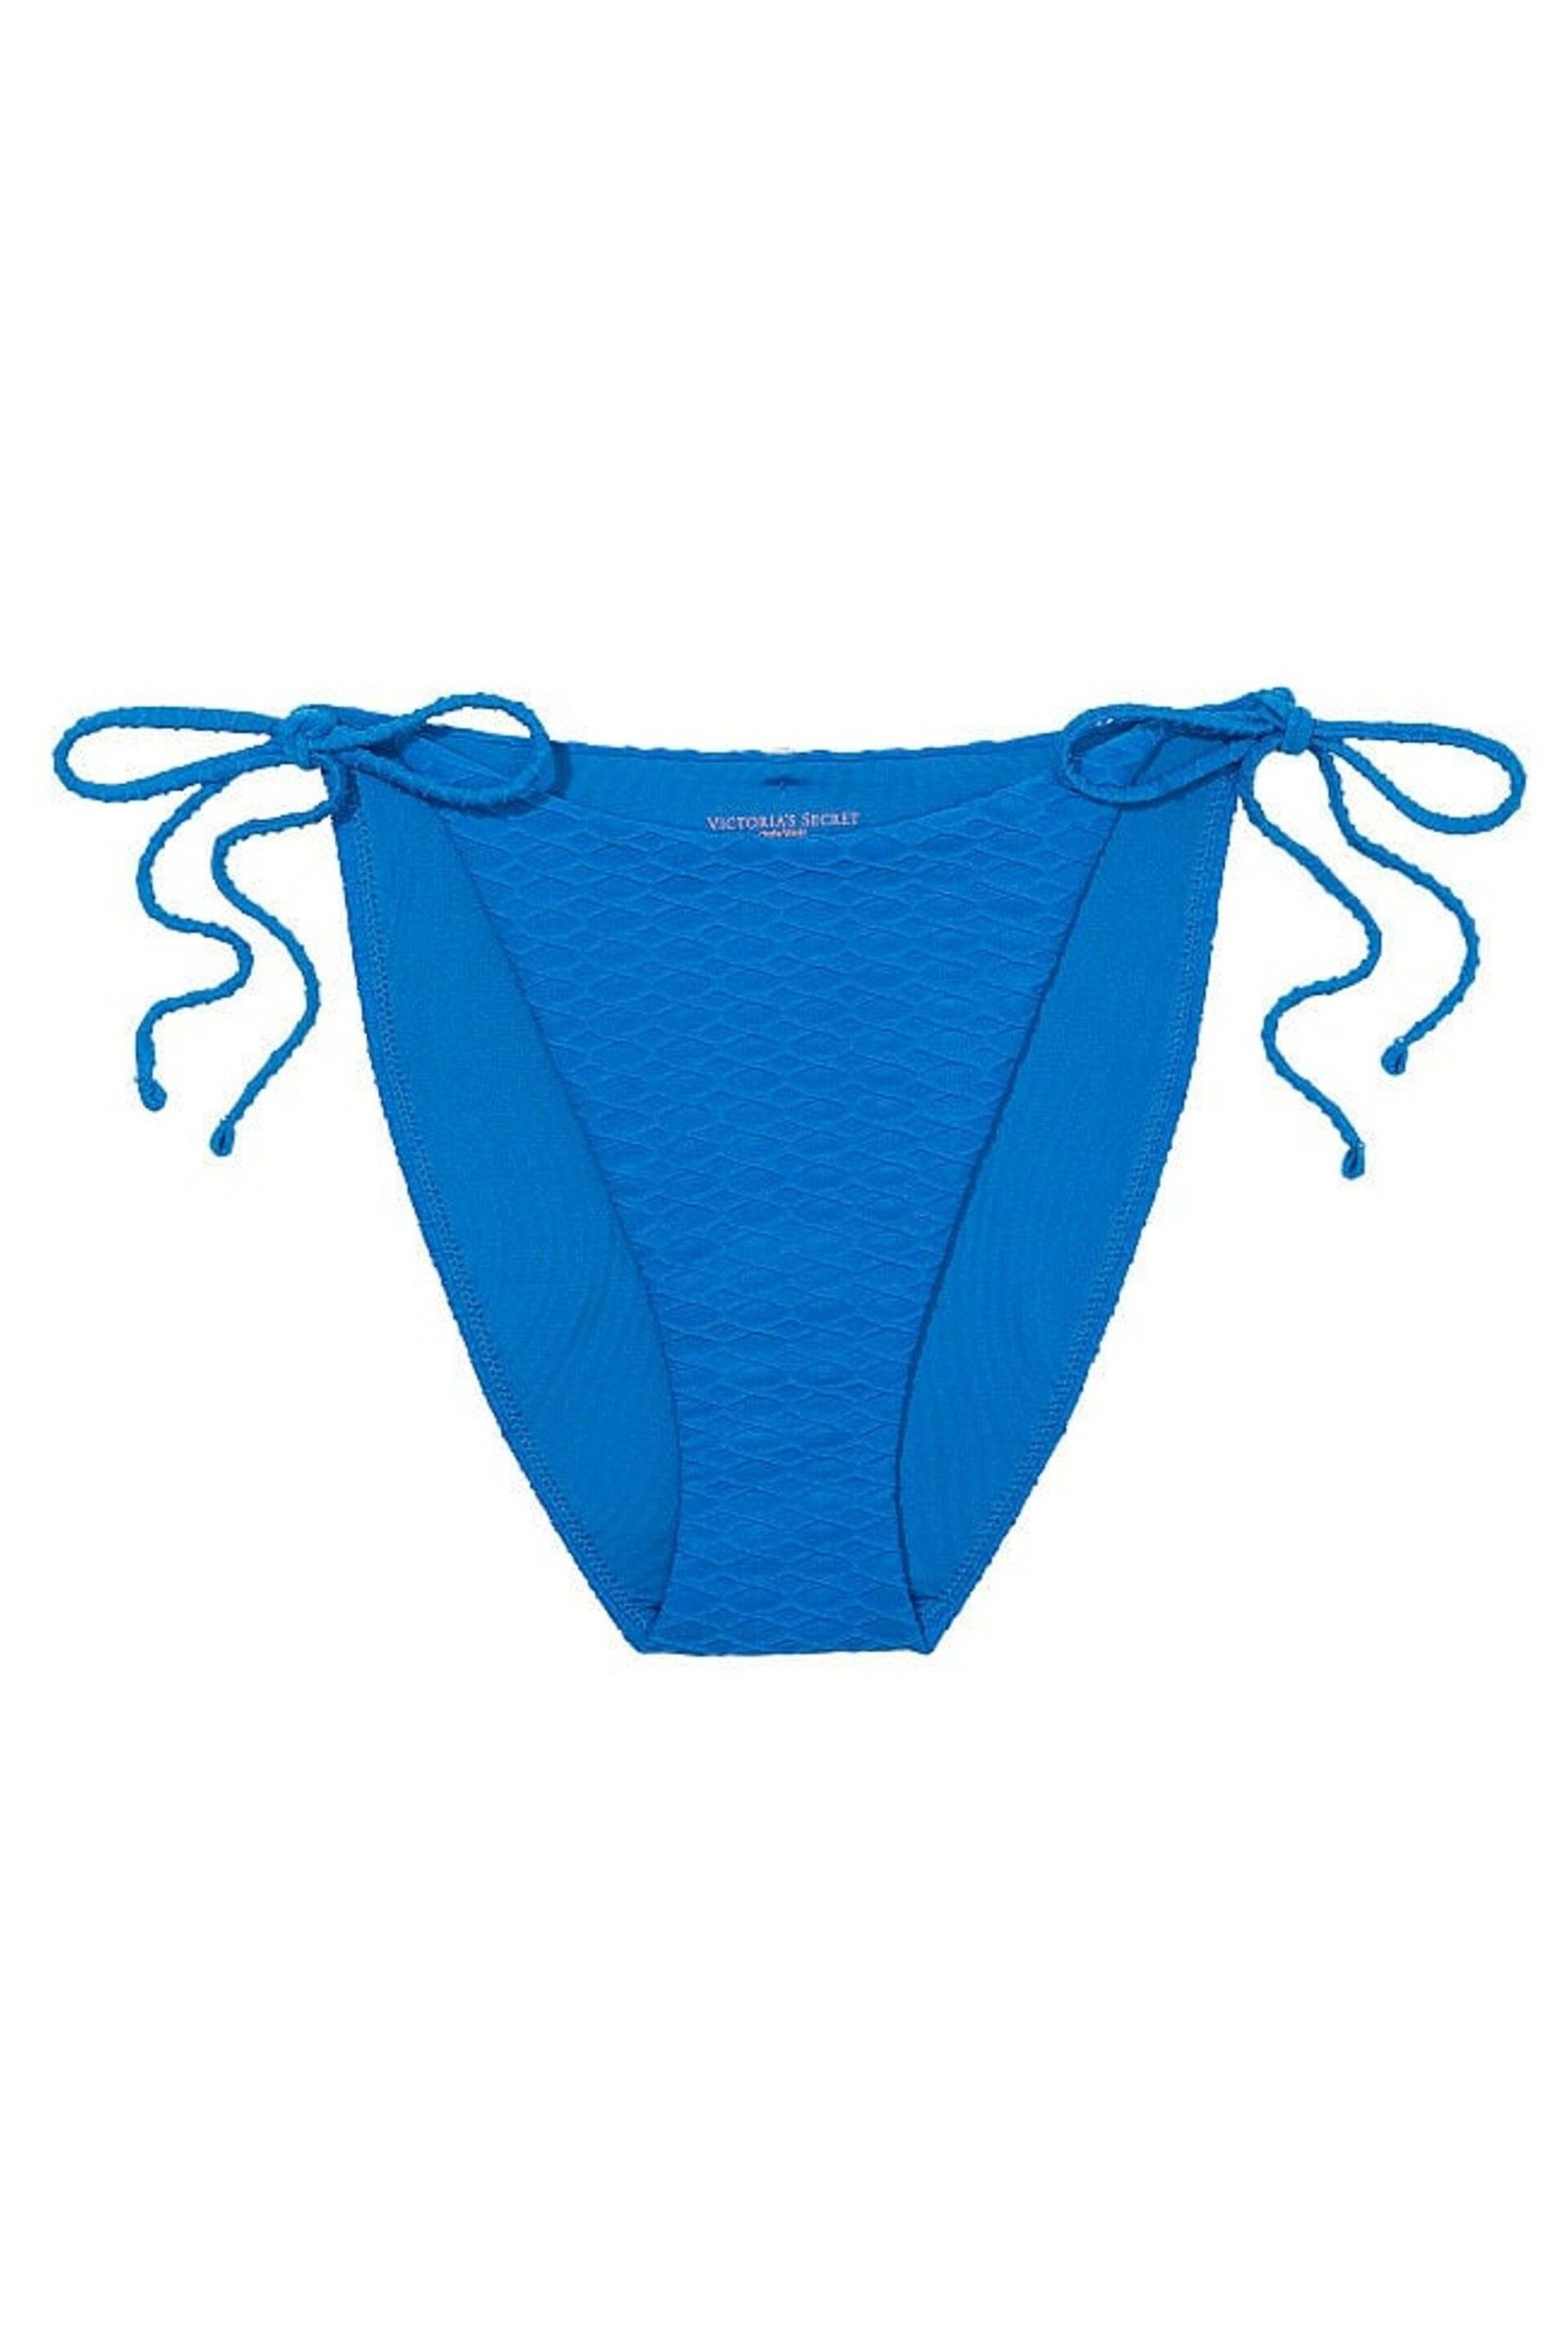 Victoria's Secret Shocking Blue Fishnet Tie Side High Leg Swim Bikini Bottom - Image 3 of 3